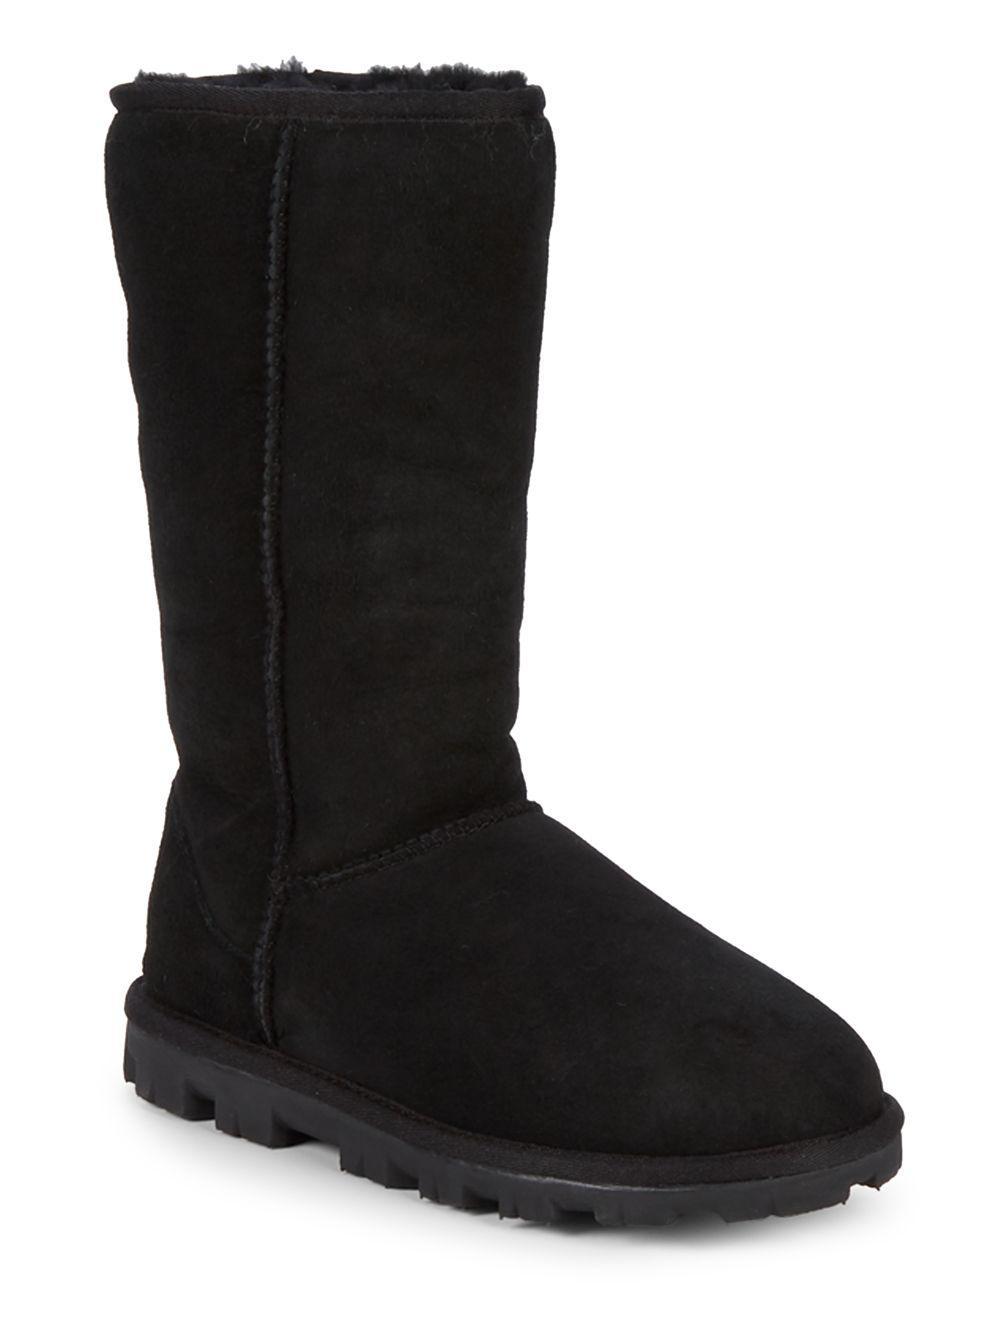 UGG Wool Australia Essential Tall Boot in Black - Lyst